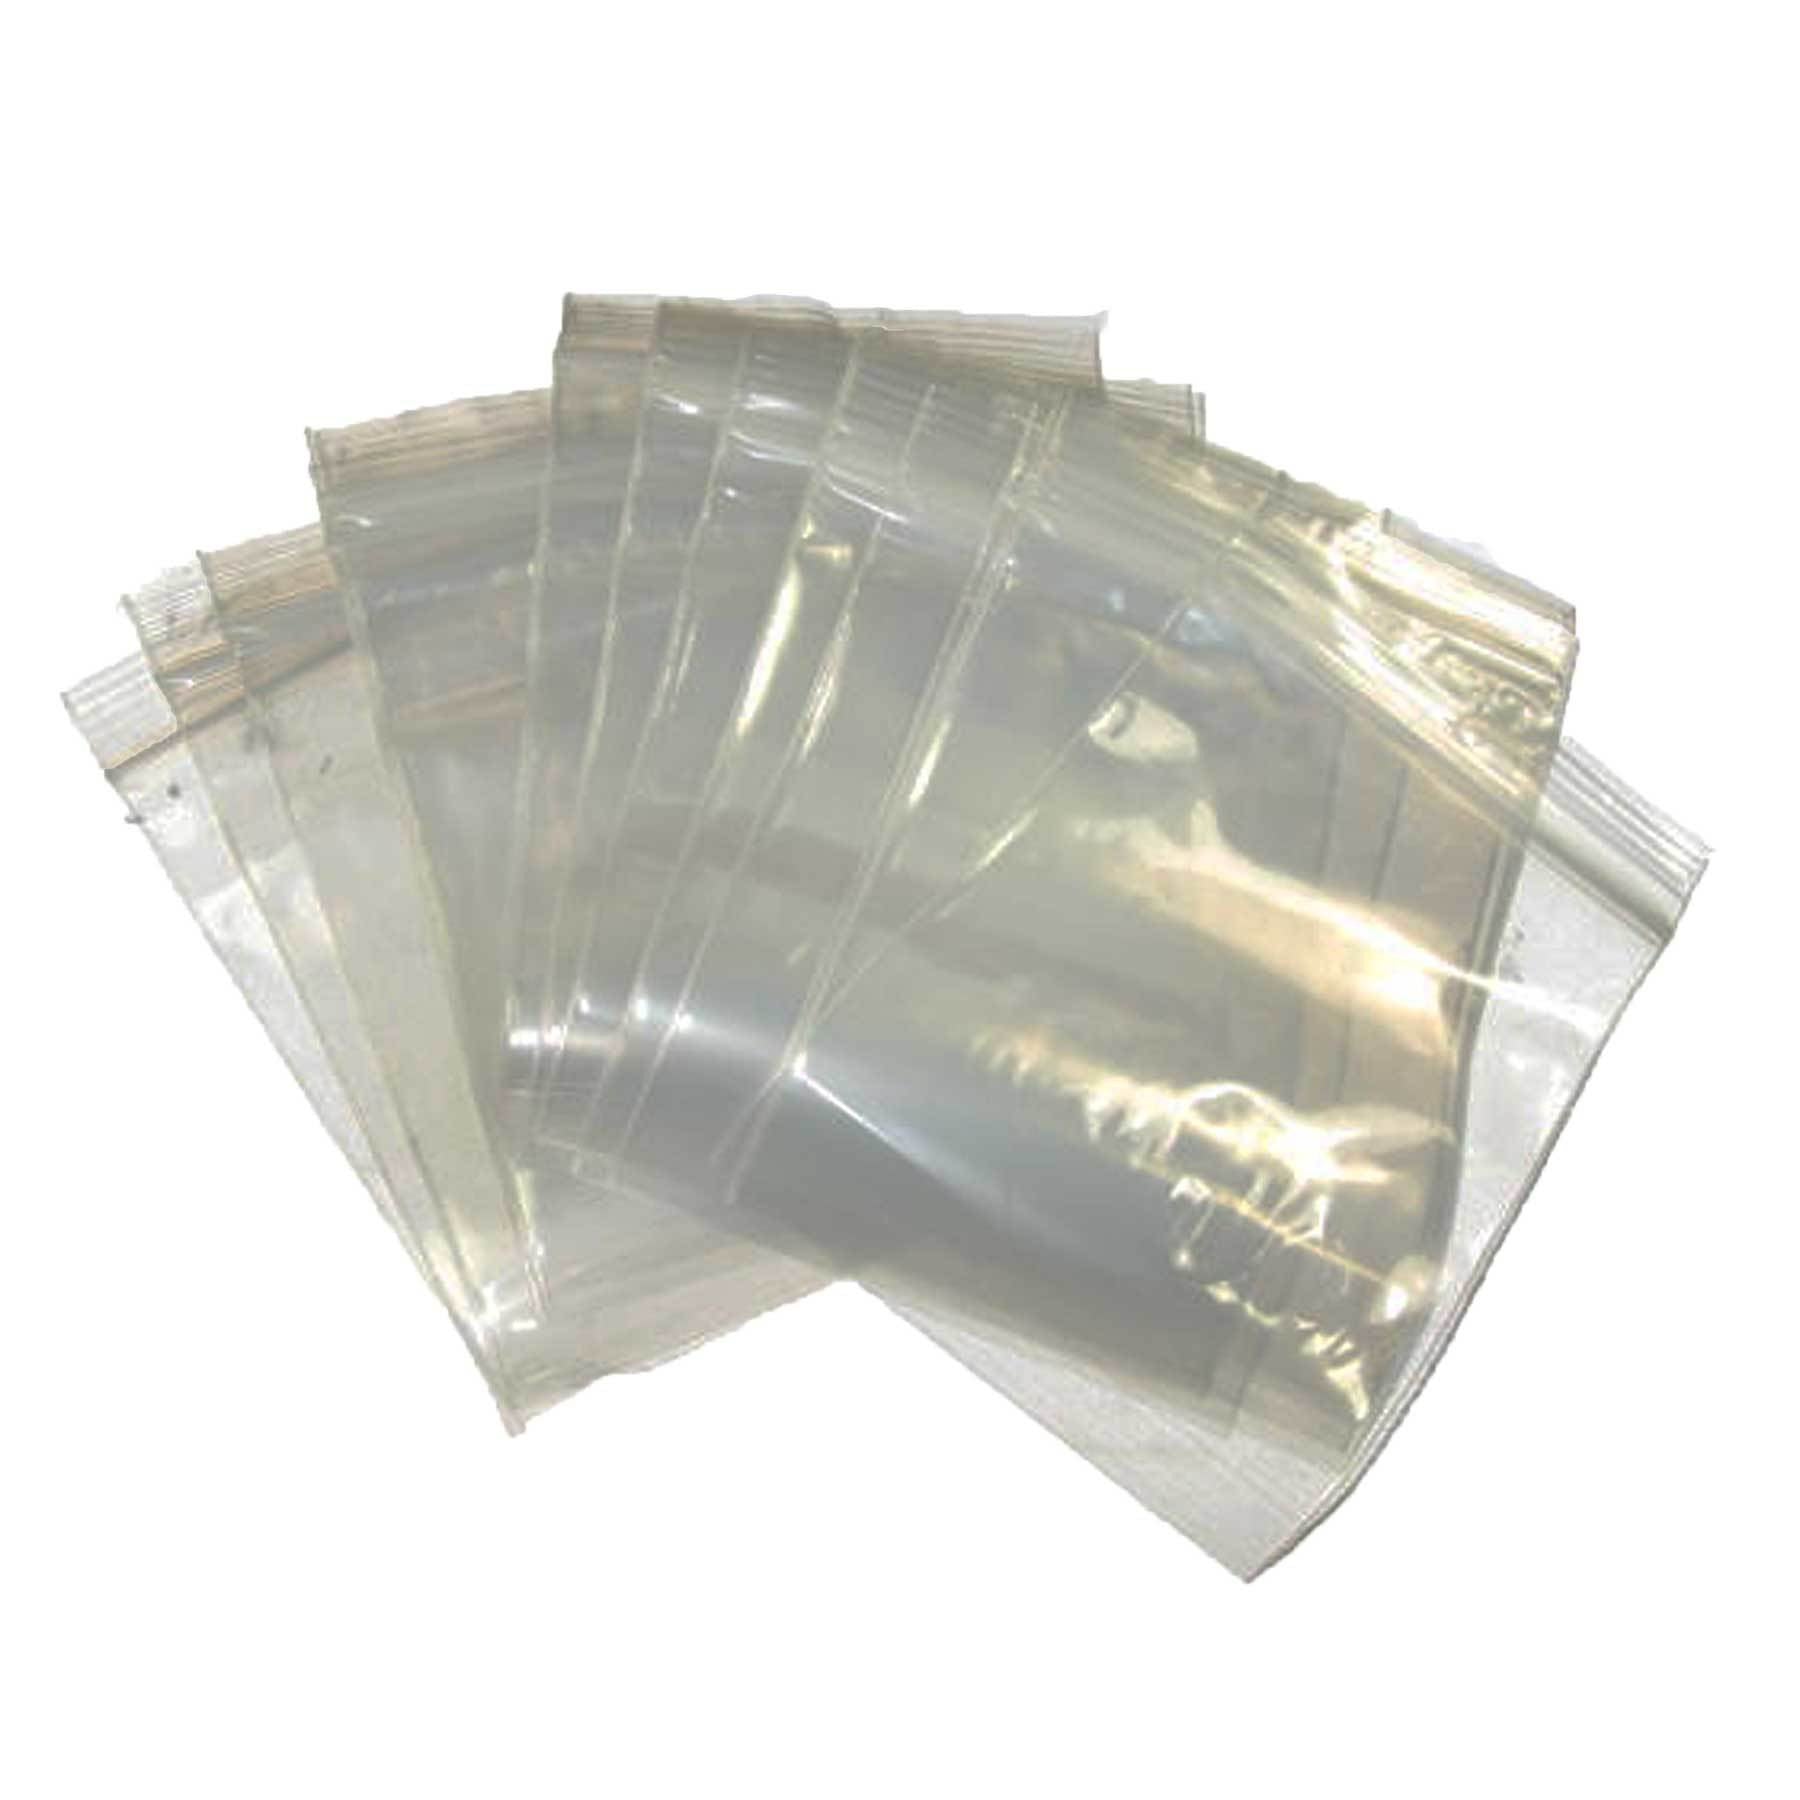 Lot of 100pcs Clear Reclosable Zip lock Plastic Bags 2-MIL Poly Zipper  Baggies | eBay